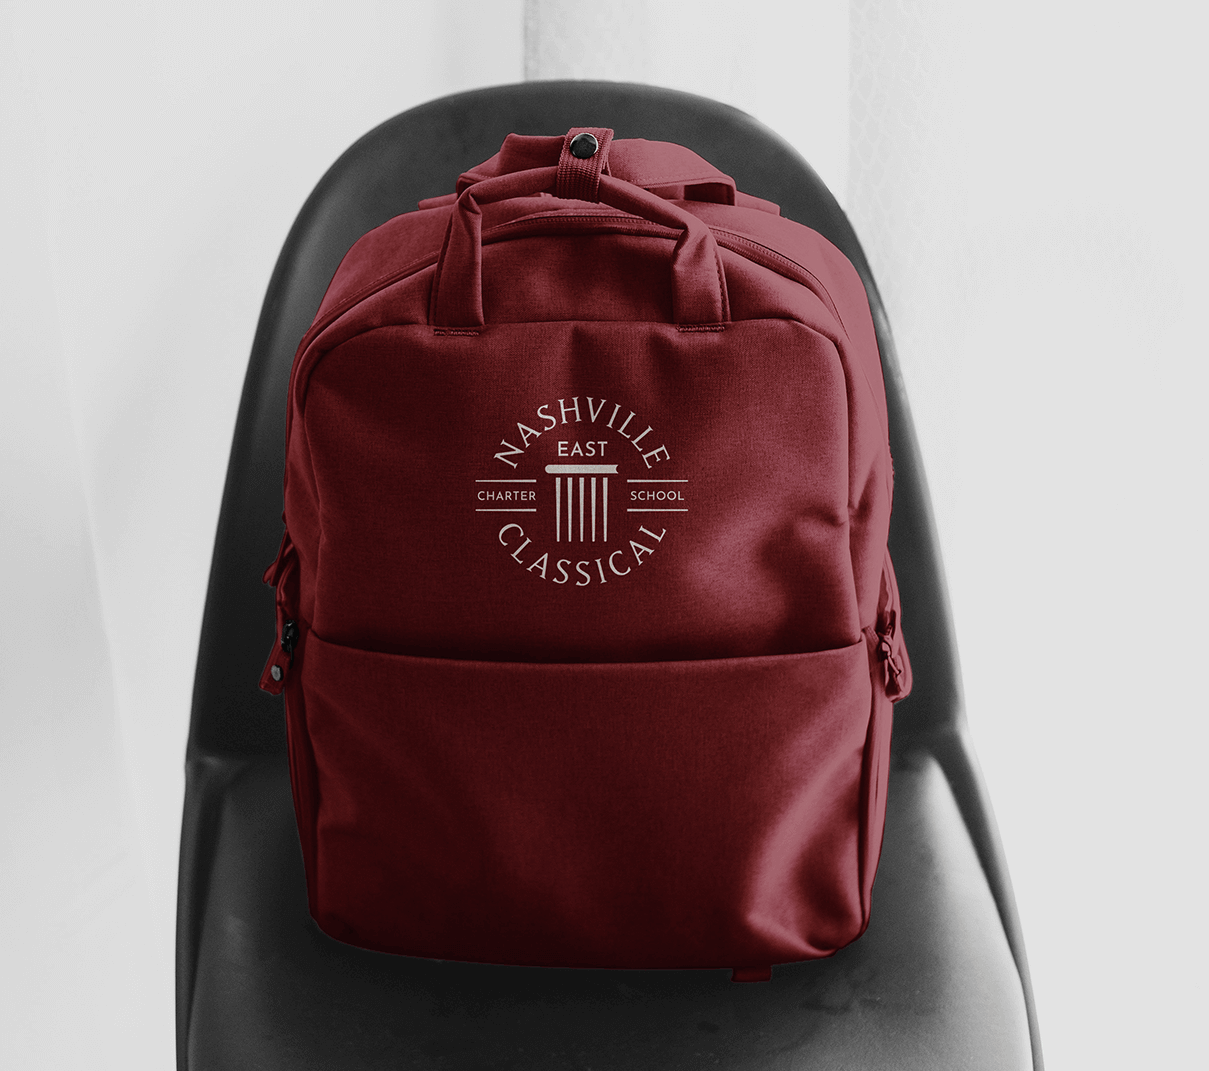 Nashville Classical Charter School rebrand application on backpack designed by ST8MNT